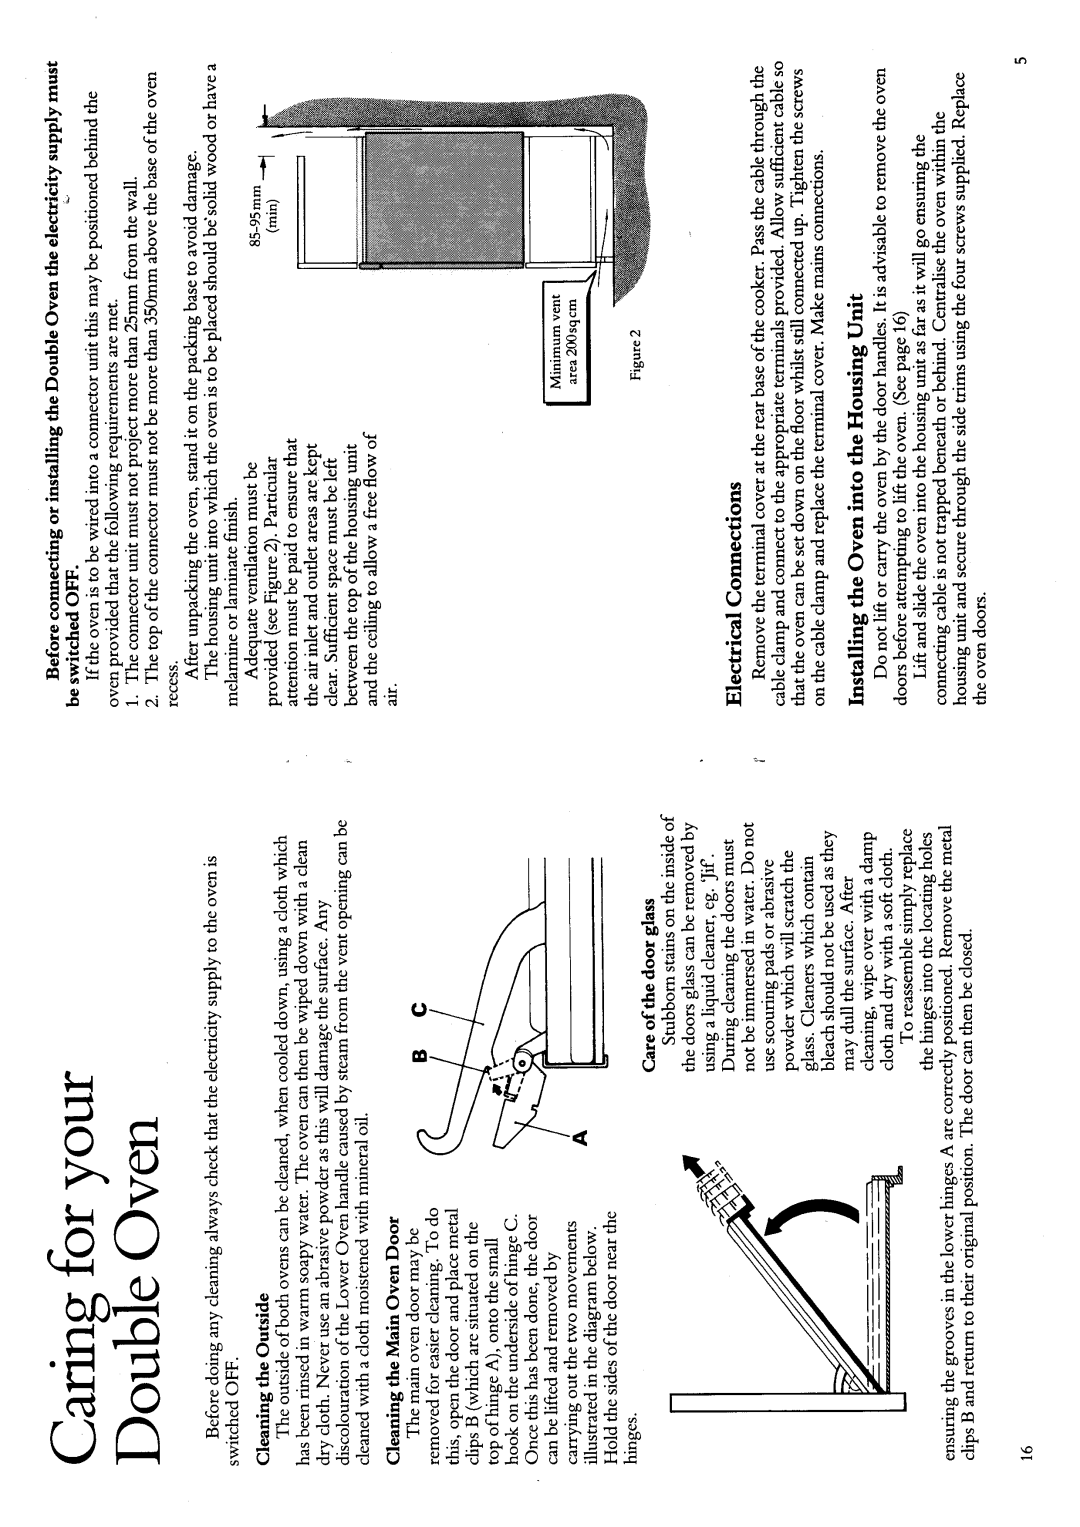 Hotpoint 6160 manual 